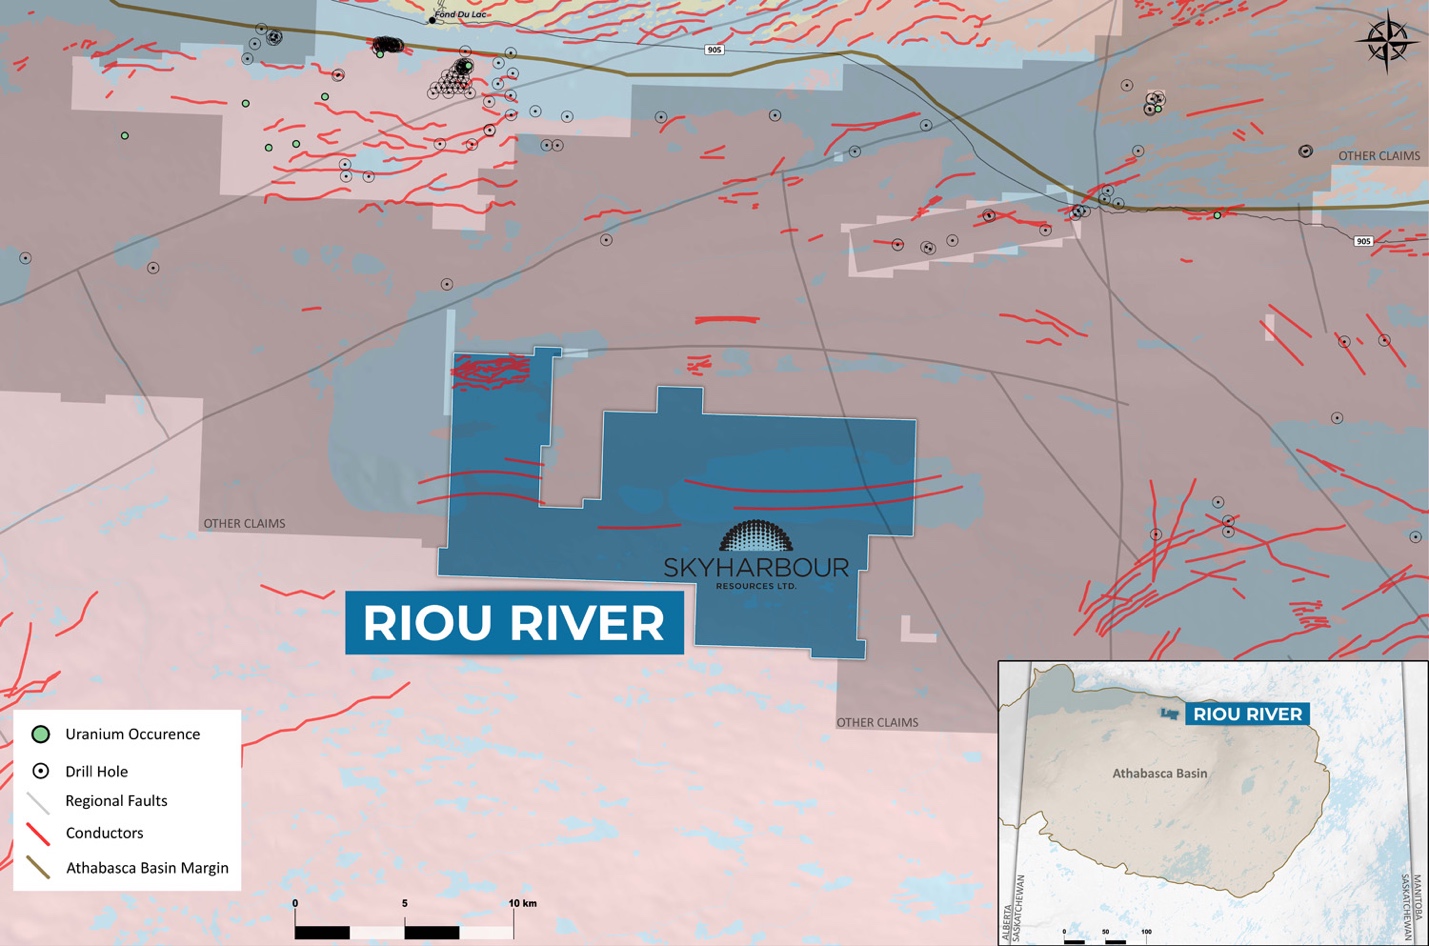 Riou River